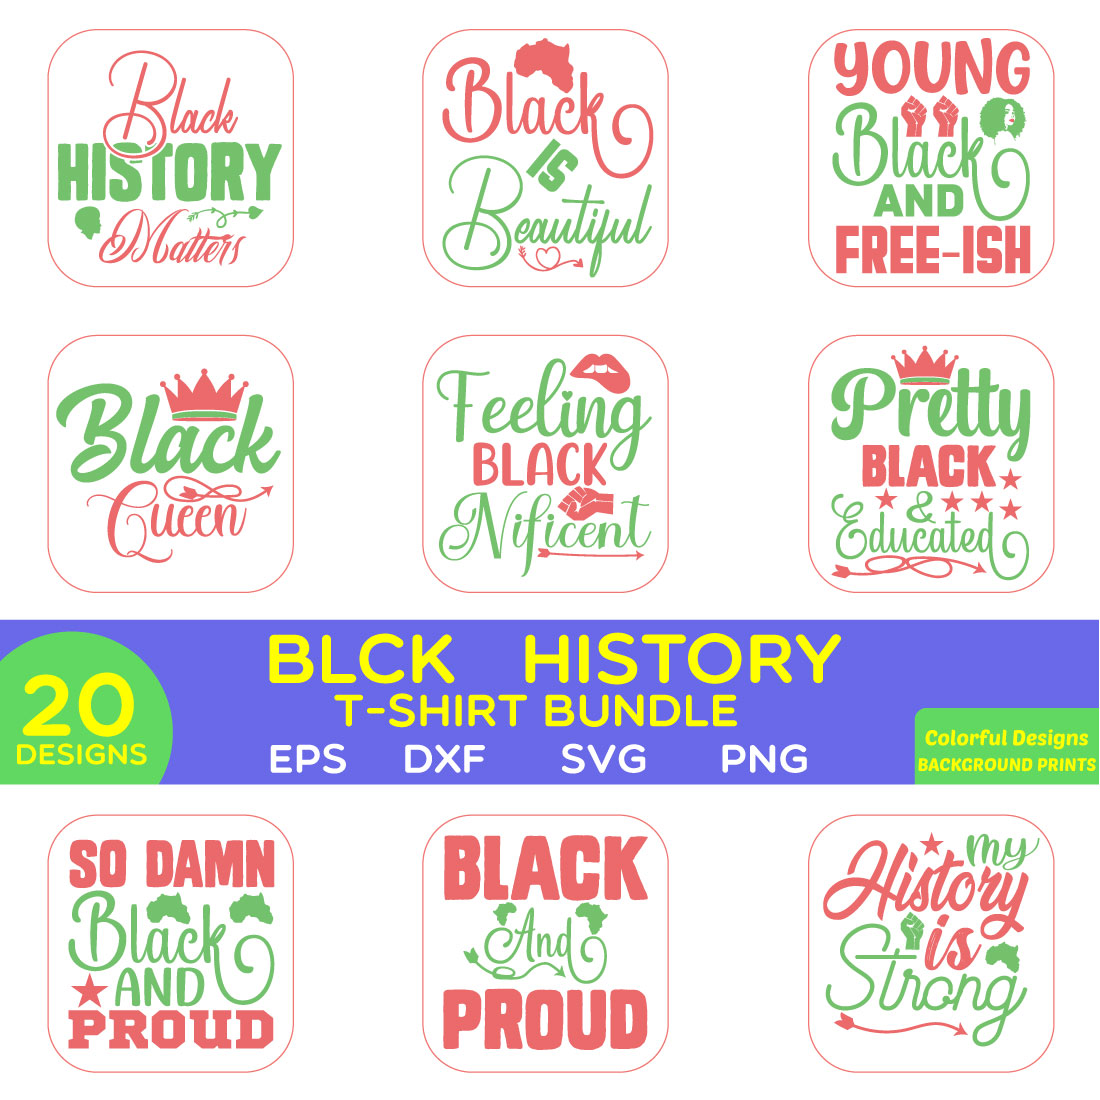 black history t-shirt bundle preview image.